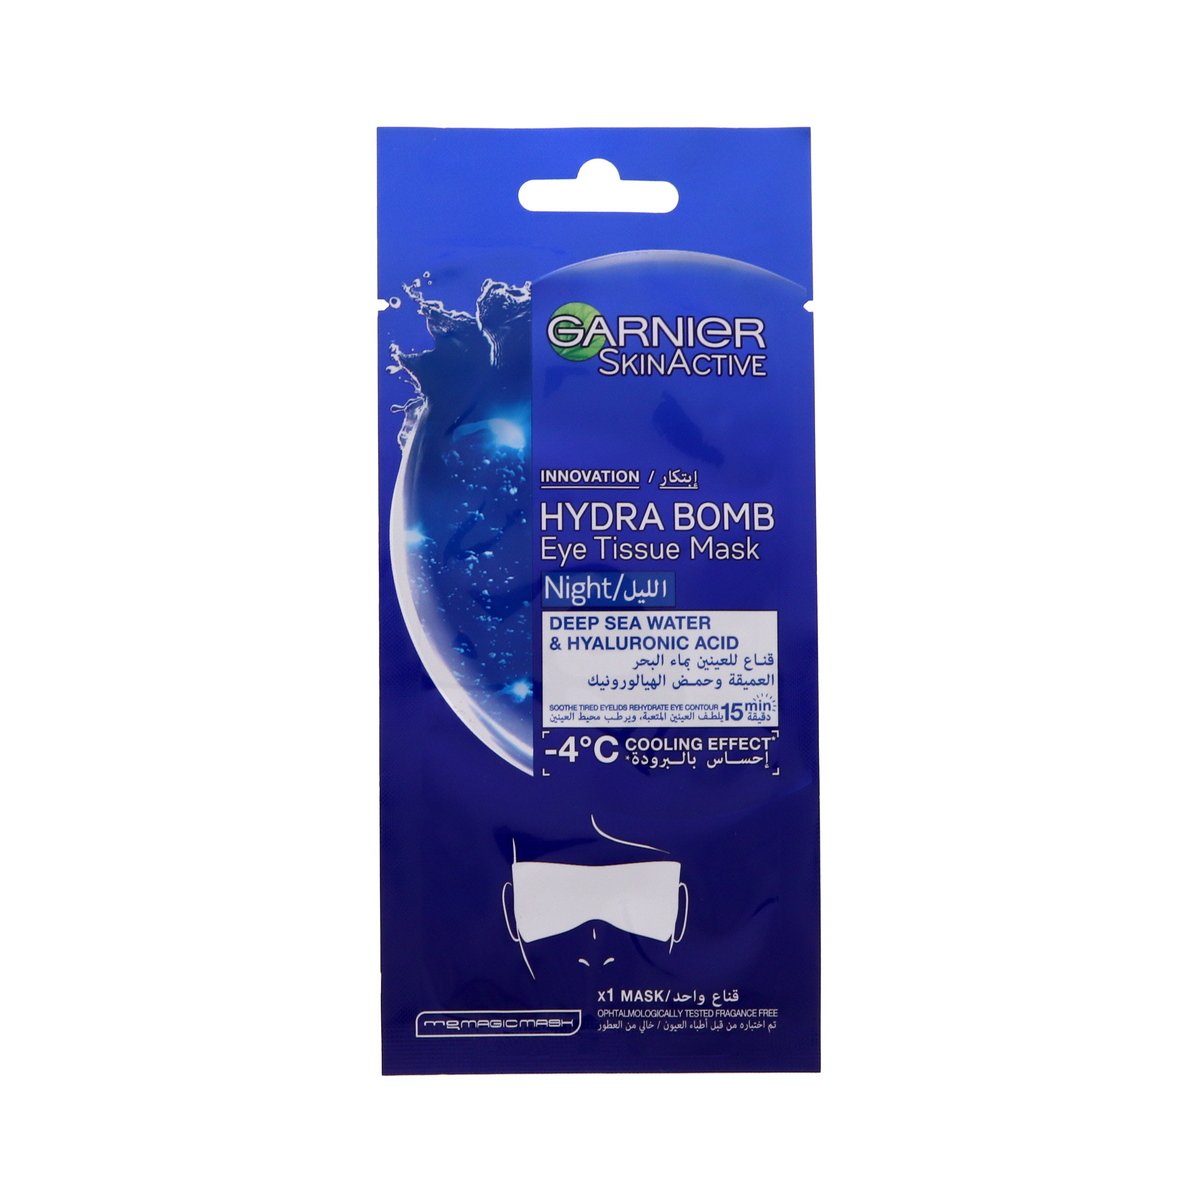 Garnier Skin Active Hydra Bomb Eye Tissue Mask 1pc